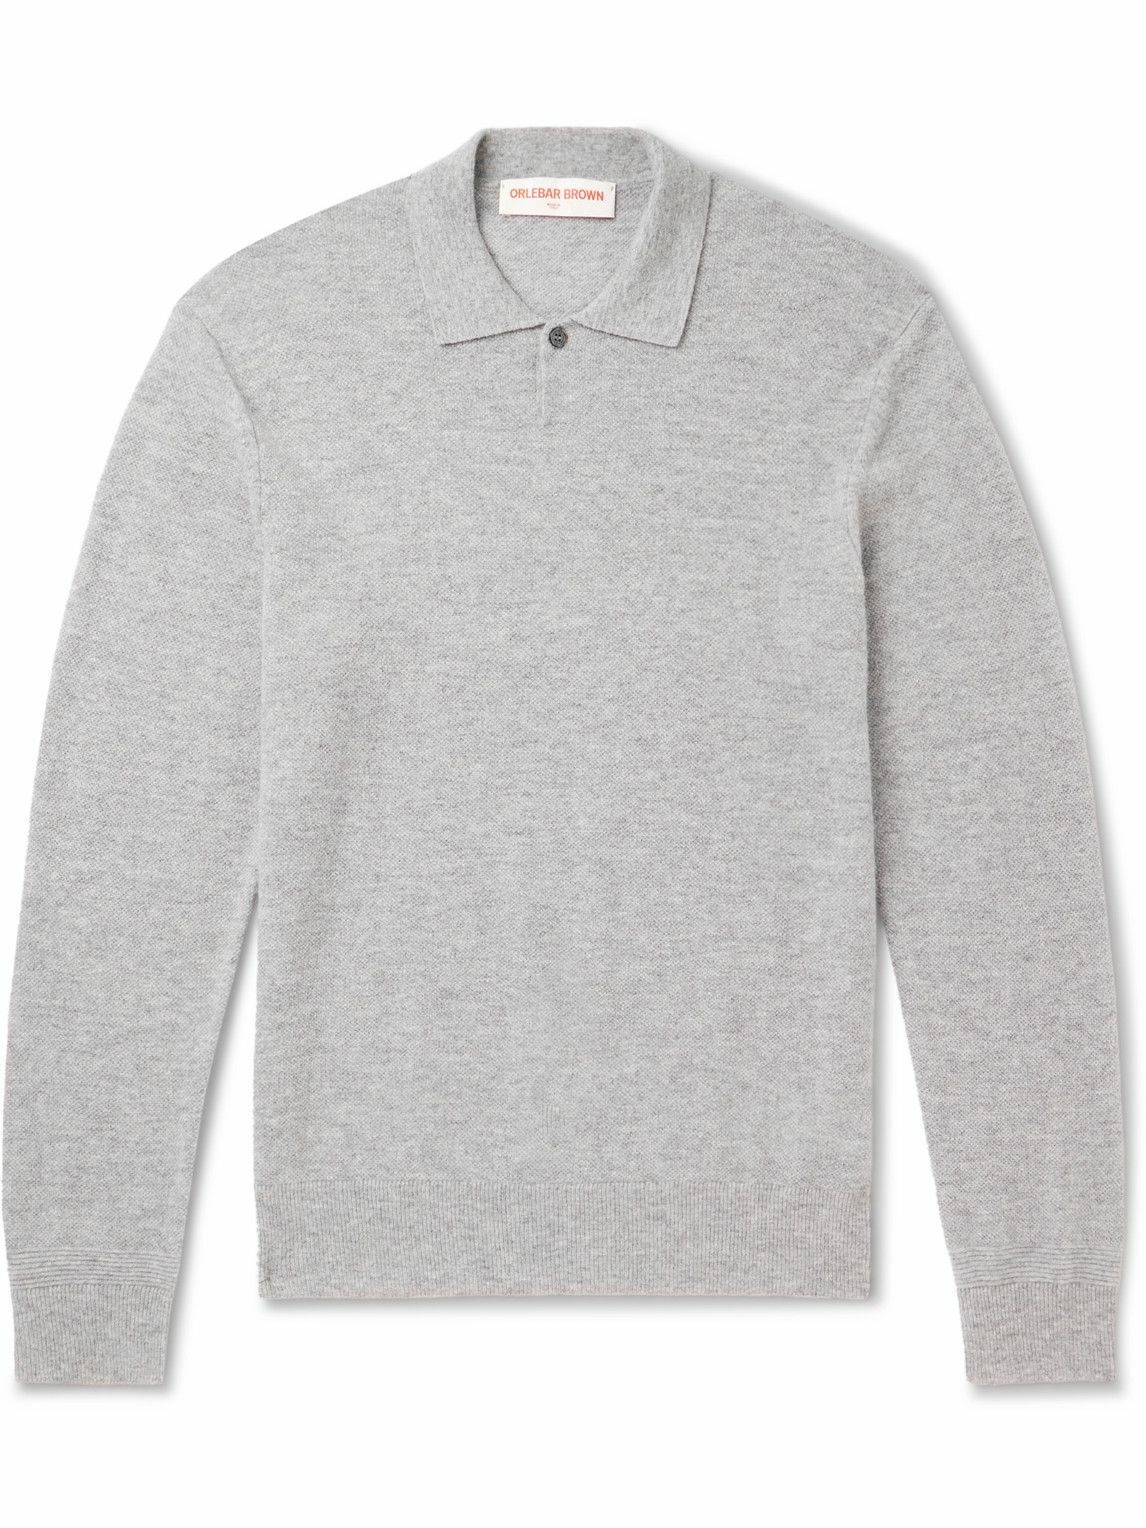 Orlebar Brown - Slim-Fit Cashmere Polo Shirt - Gray Orlebar Brown